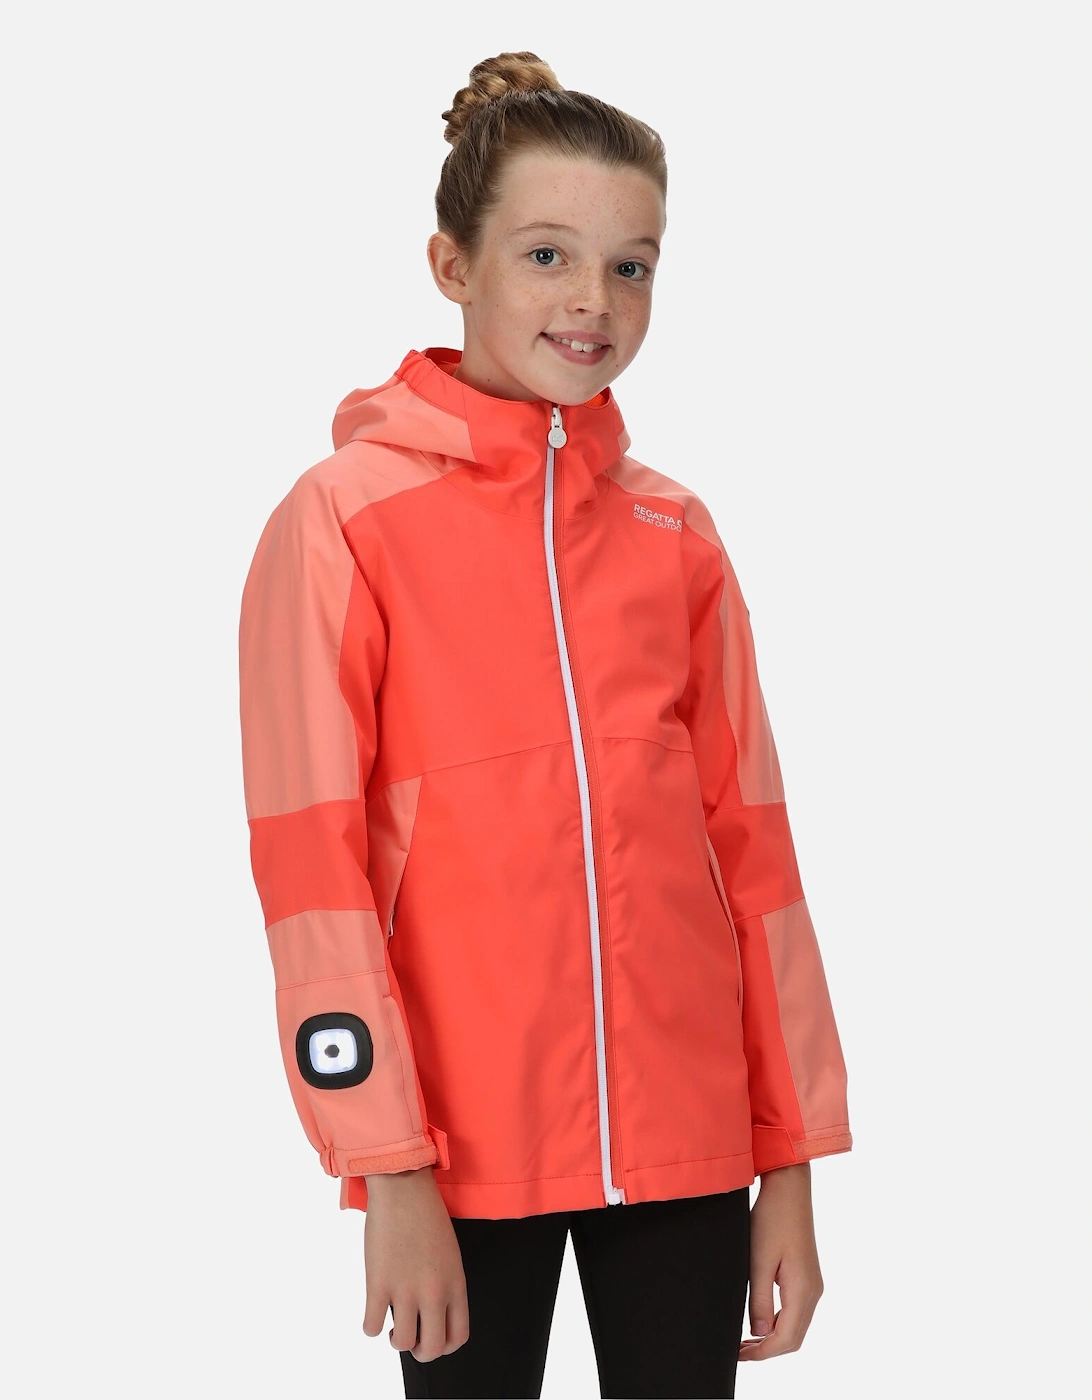 Childrens/Kids Rayz Waterproof Jacket